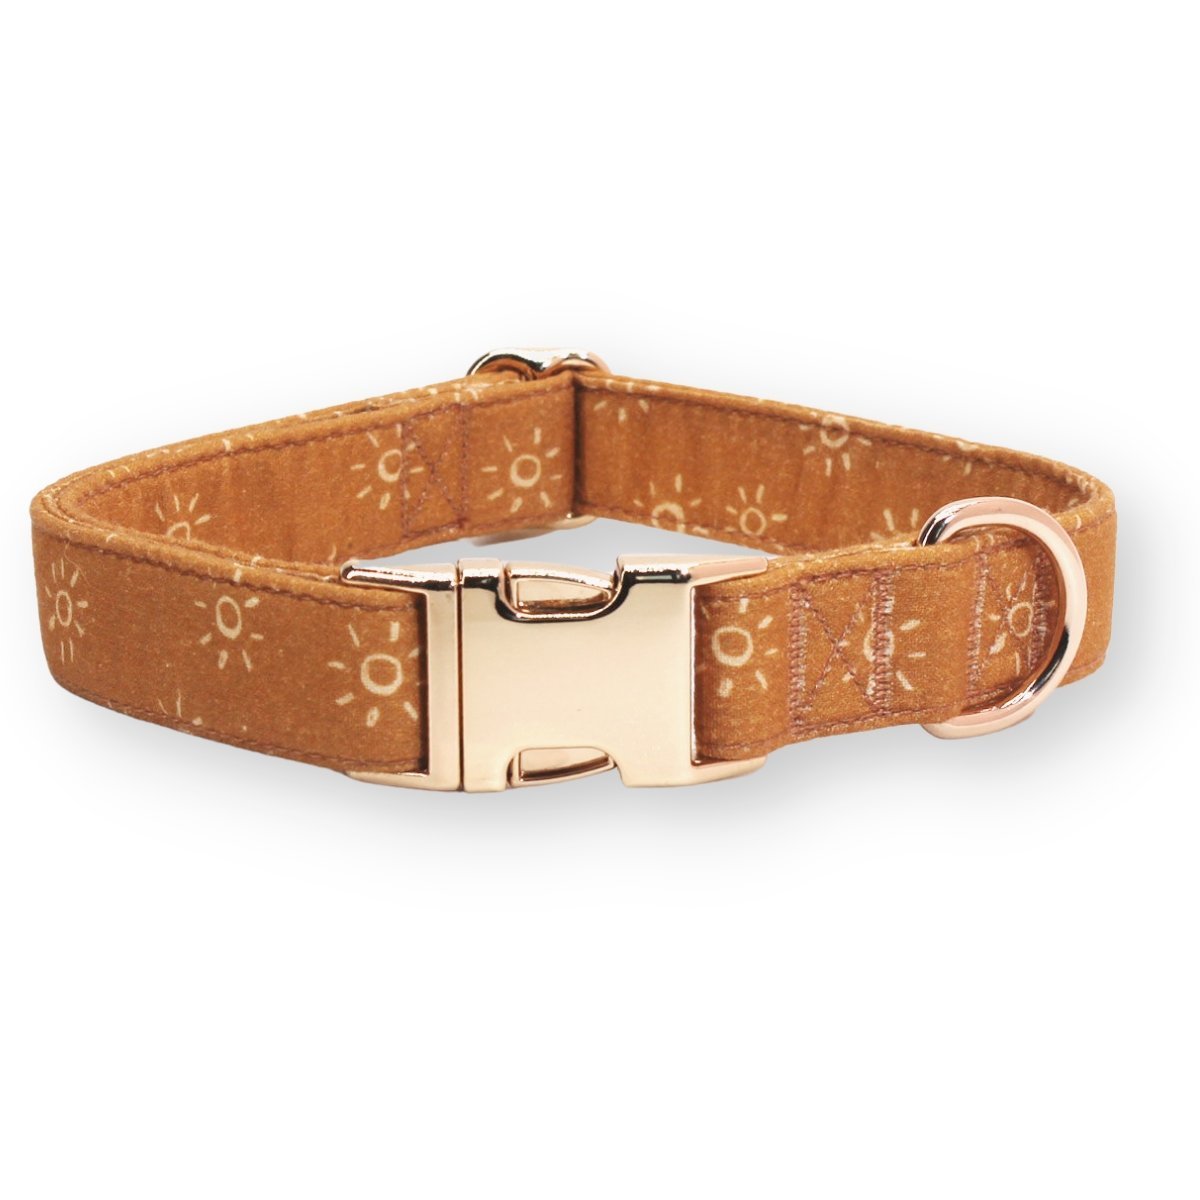 Louis Vuitton Dog Collar and Leash -  Canada